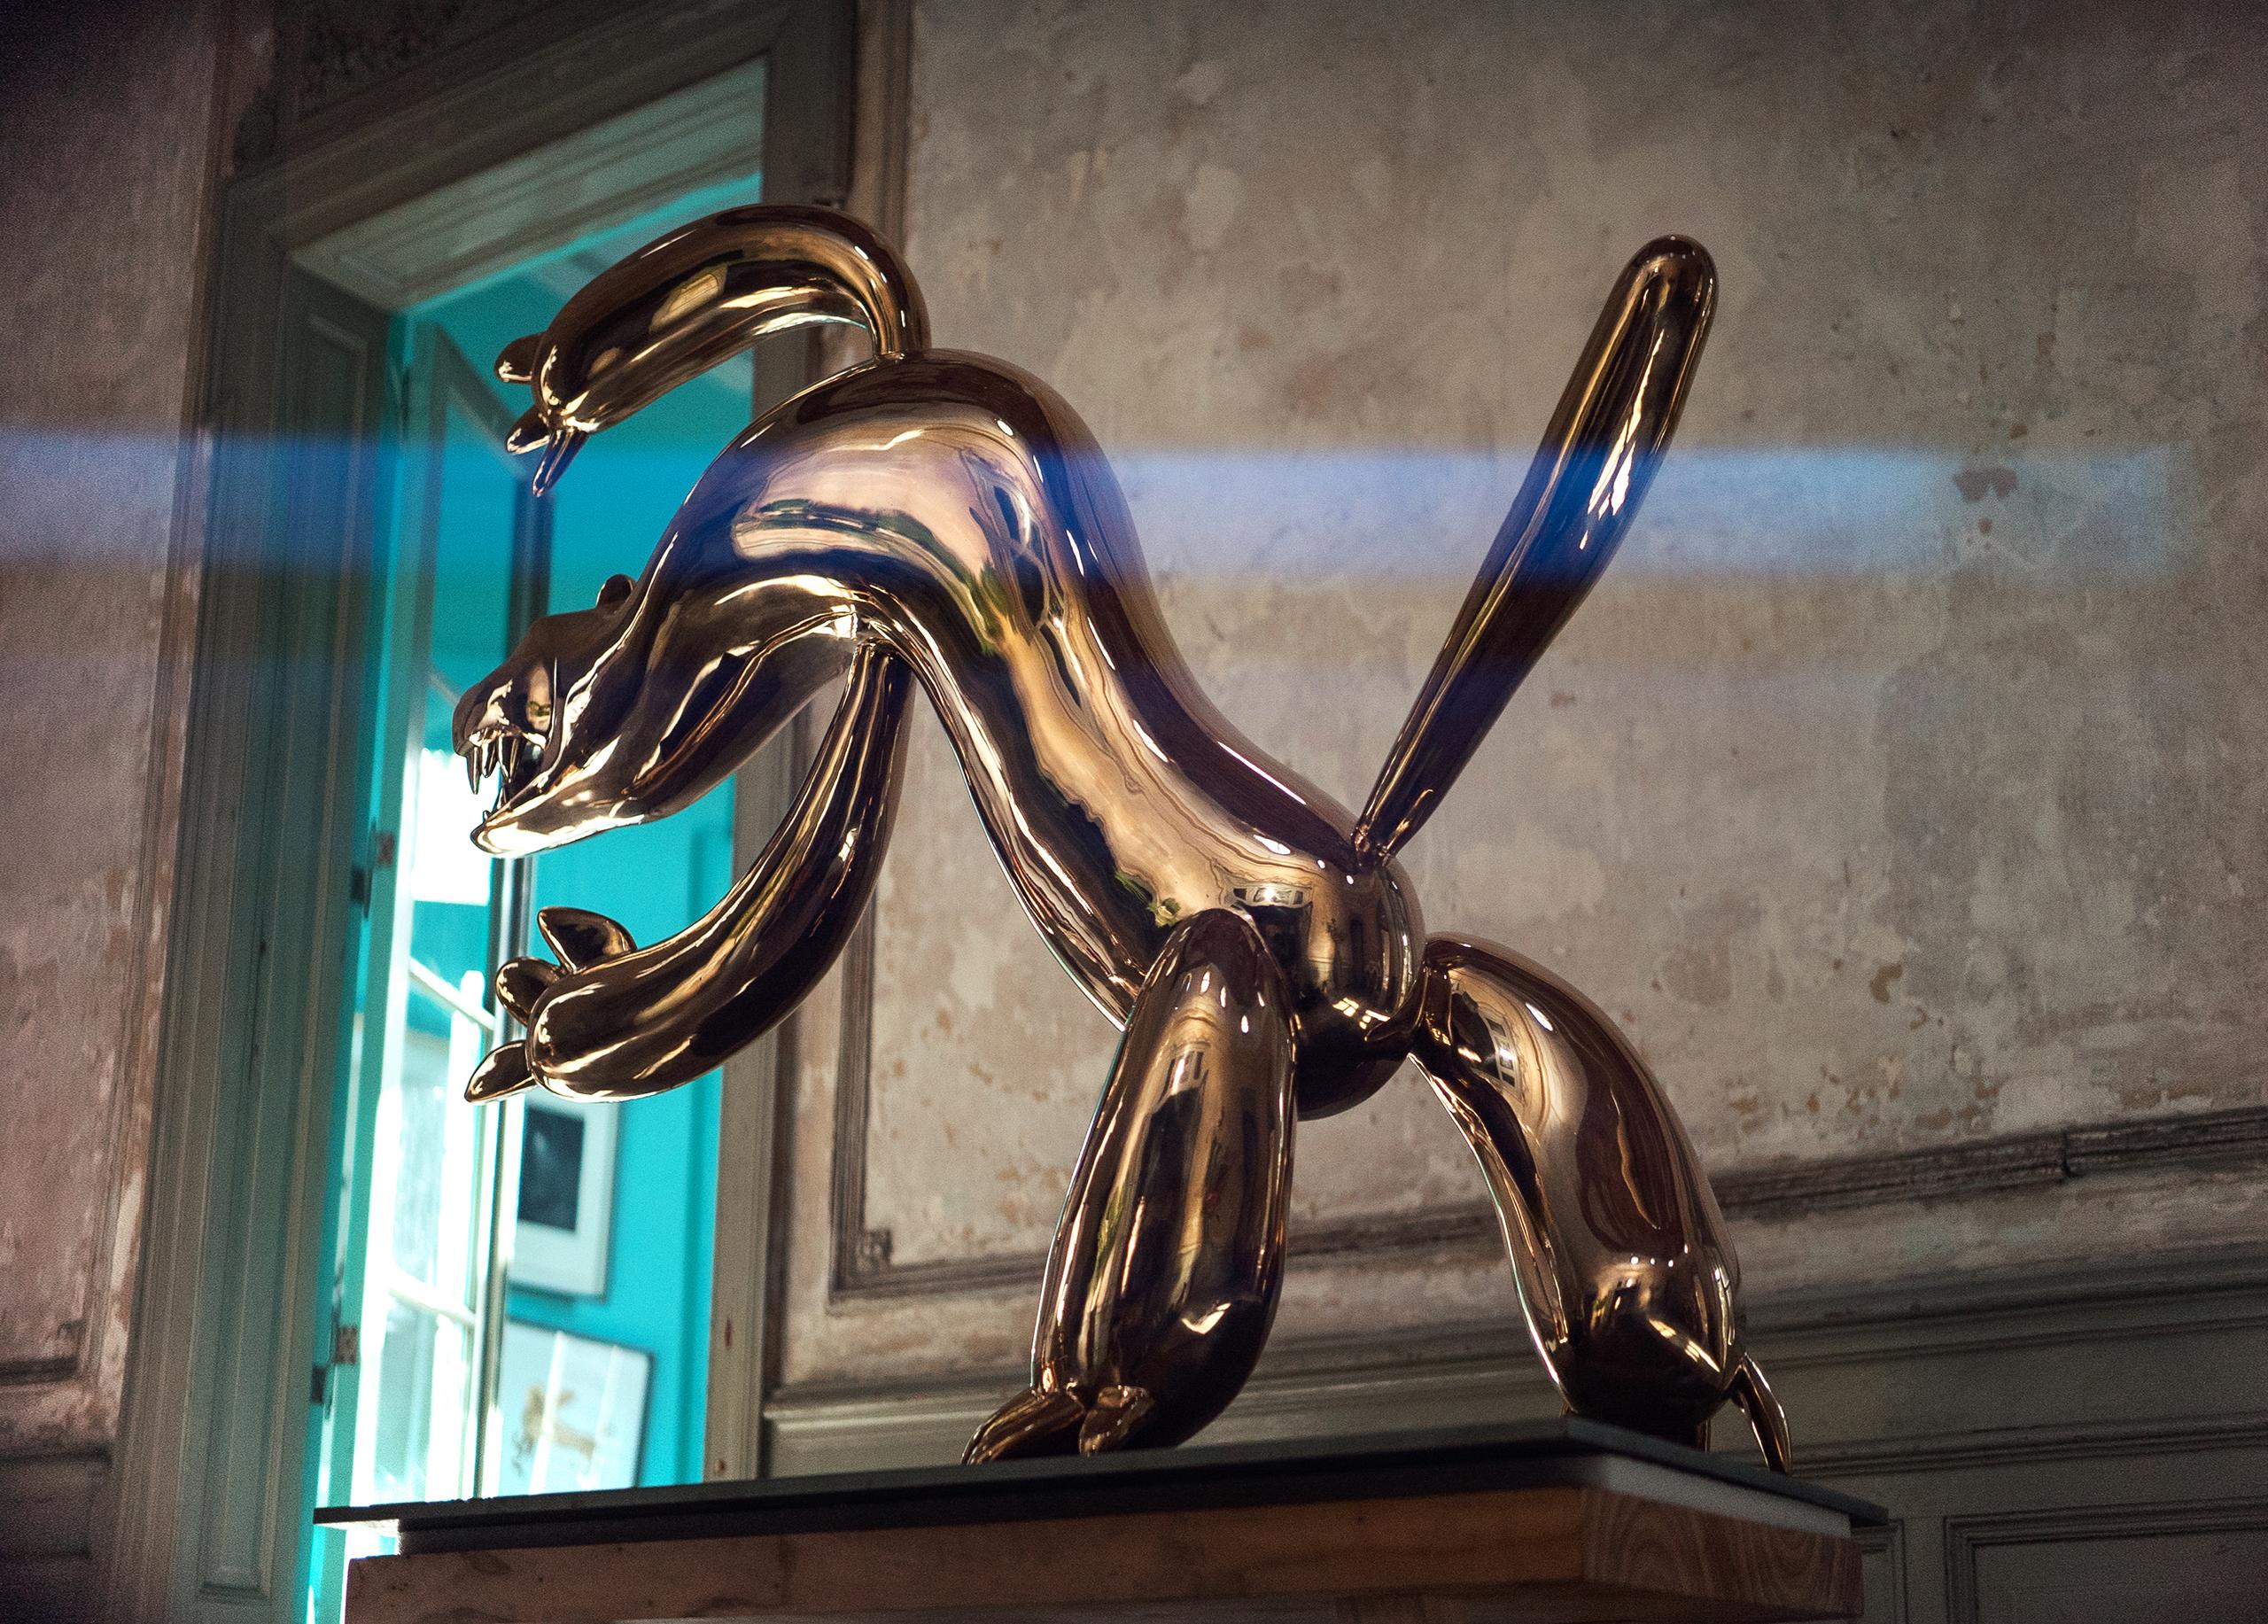 Tiger by Marcelo Martin Burgos - Polished bronze sculpture, golden, wild cat For Sale 2